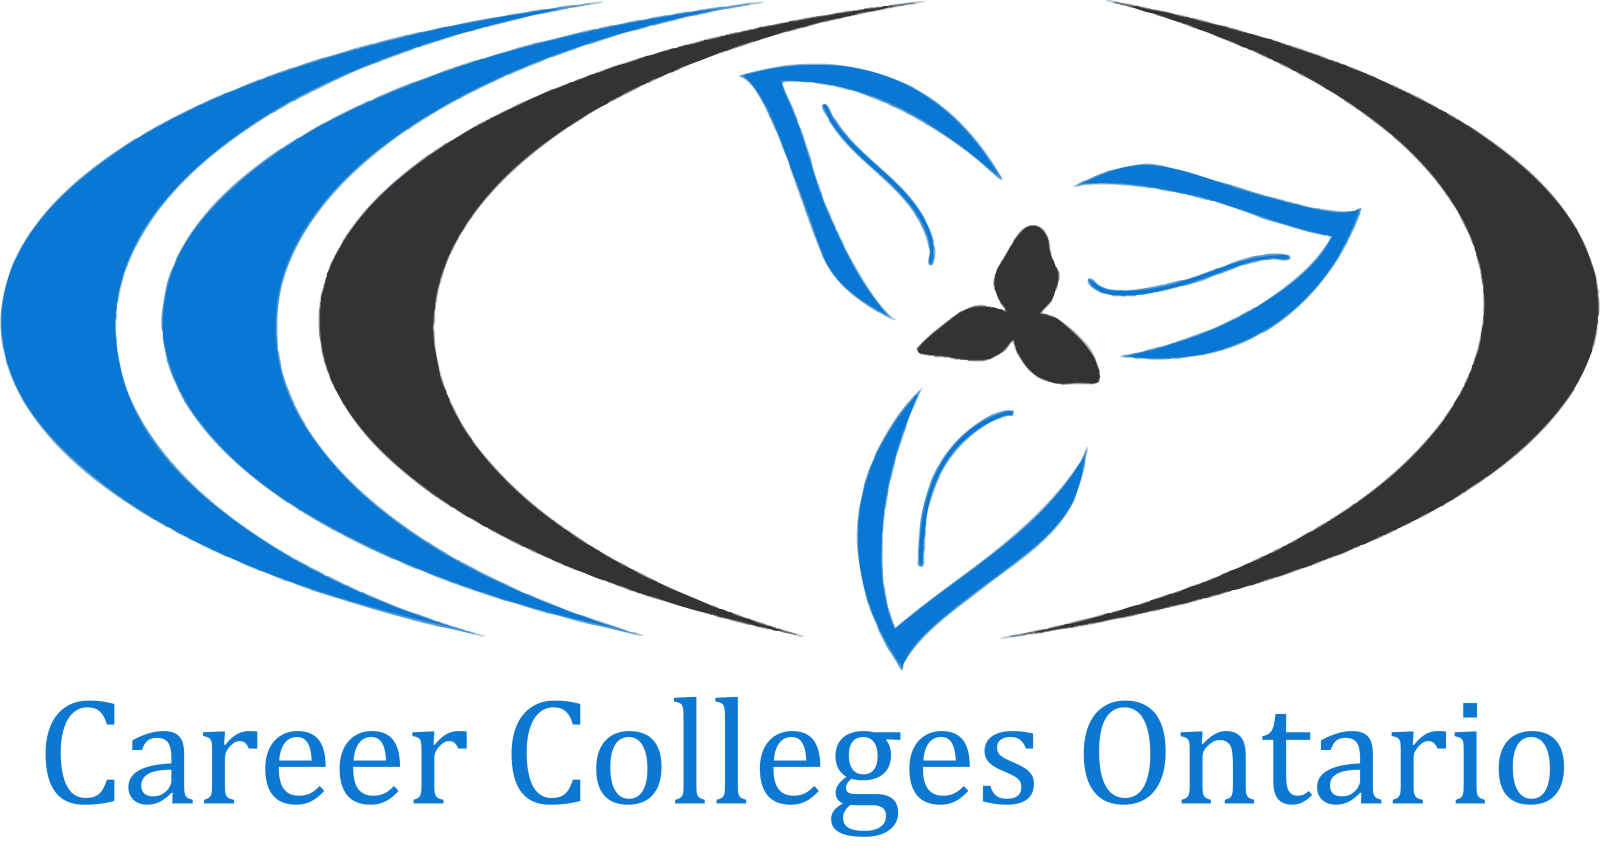 Member of Career Colleges Ontario